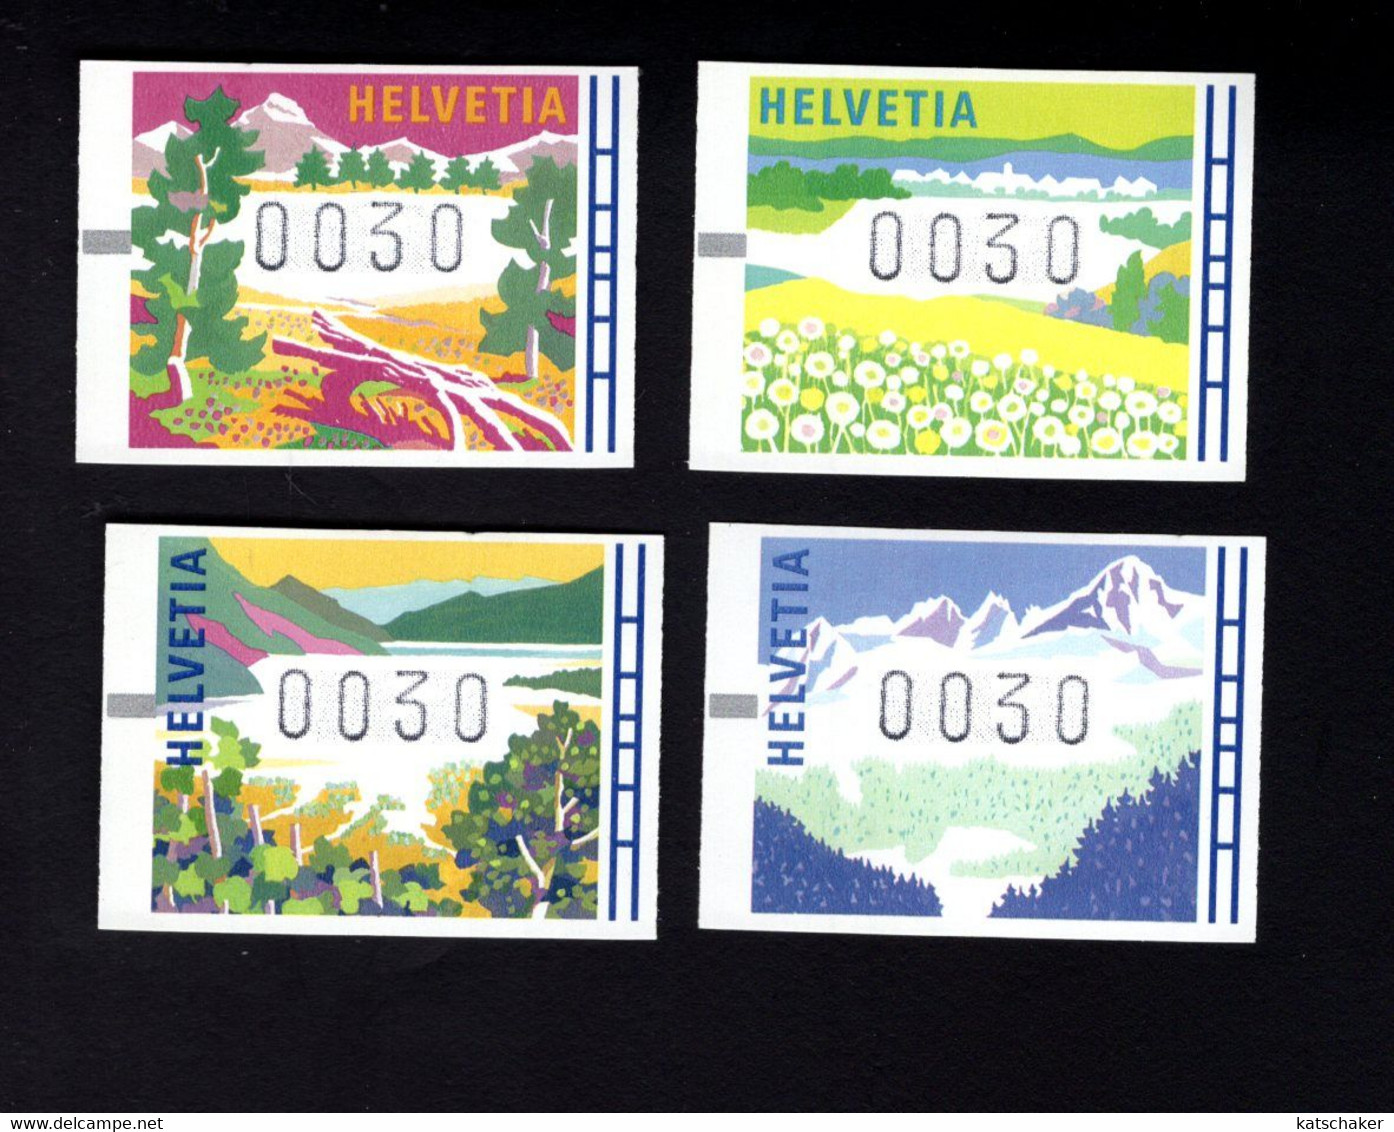 240548461 1996 (XX)  POSTFRIS MINT NEVER HINGED POSTFRISCH EINWANDFREI MICHEL ATM 7 8 9 10 FACIALE 0030 - Automatic Stamps